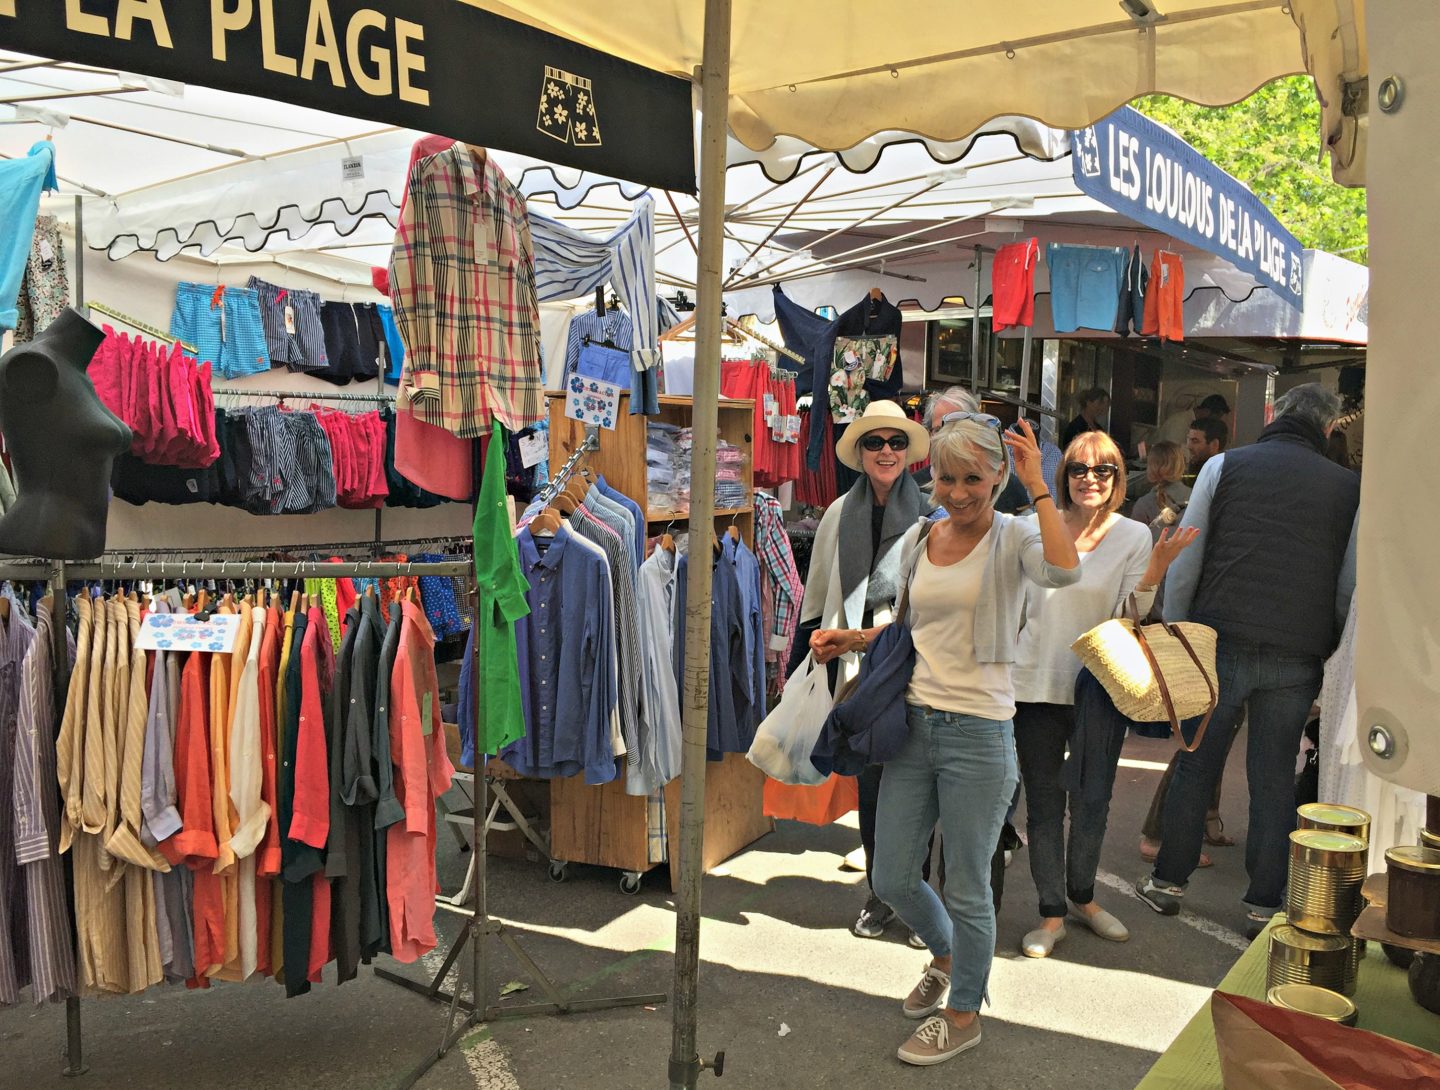 Visit to St Tropez market